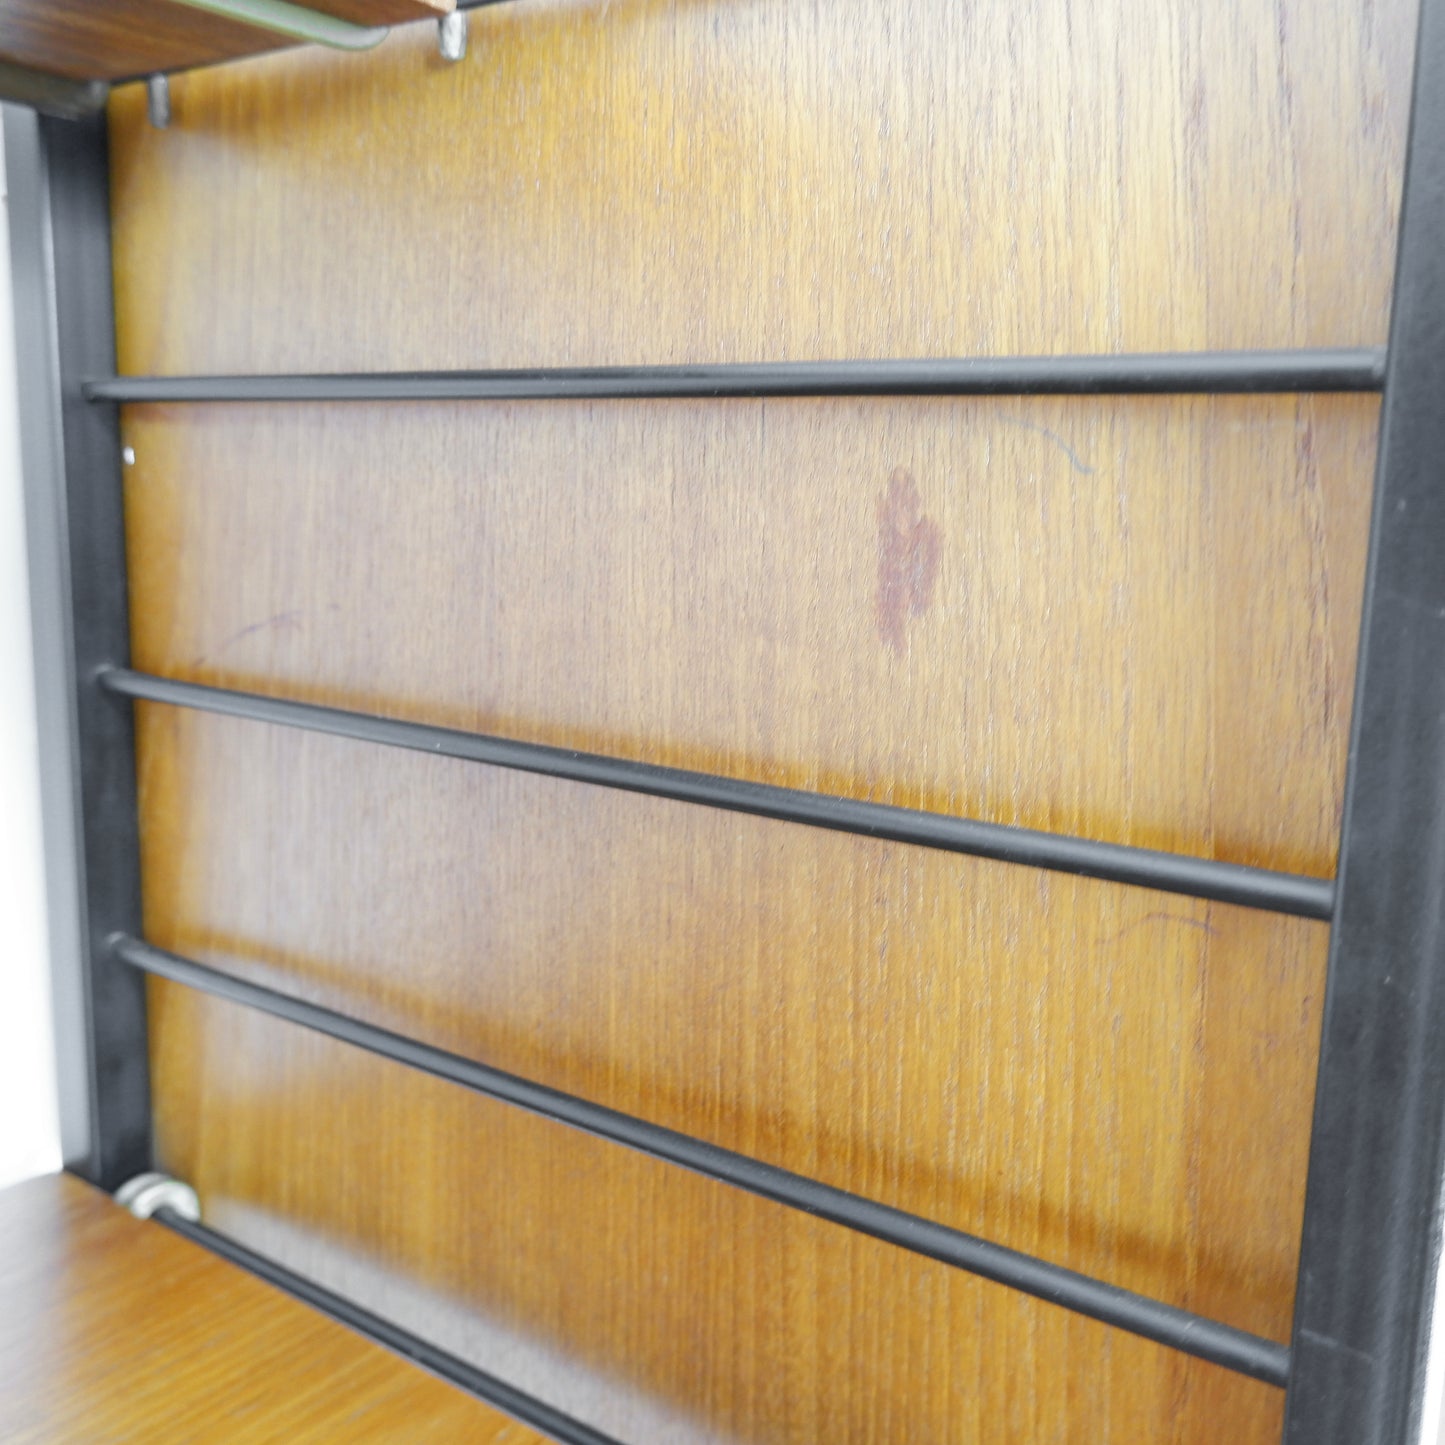 Ladderax Modular Teak Shelving System - 3 Bays - 1 Desk, 4 Cabinets and 4 Shelves - Staples - British Mid Century Icon